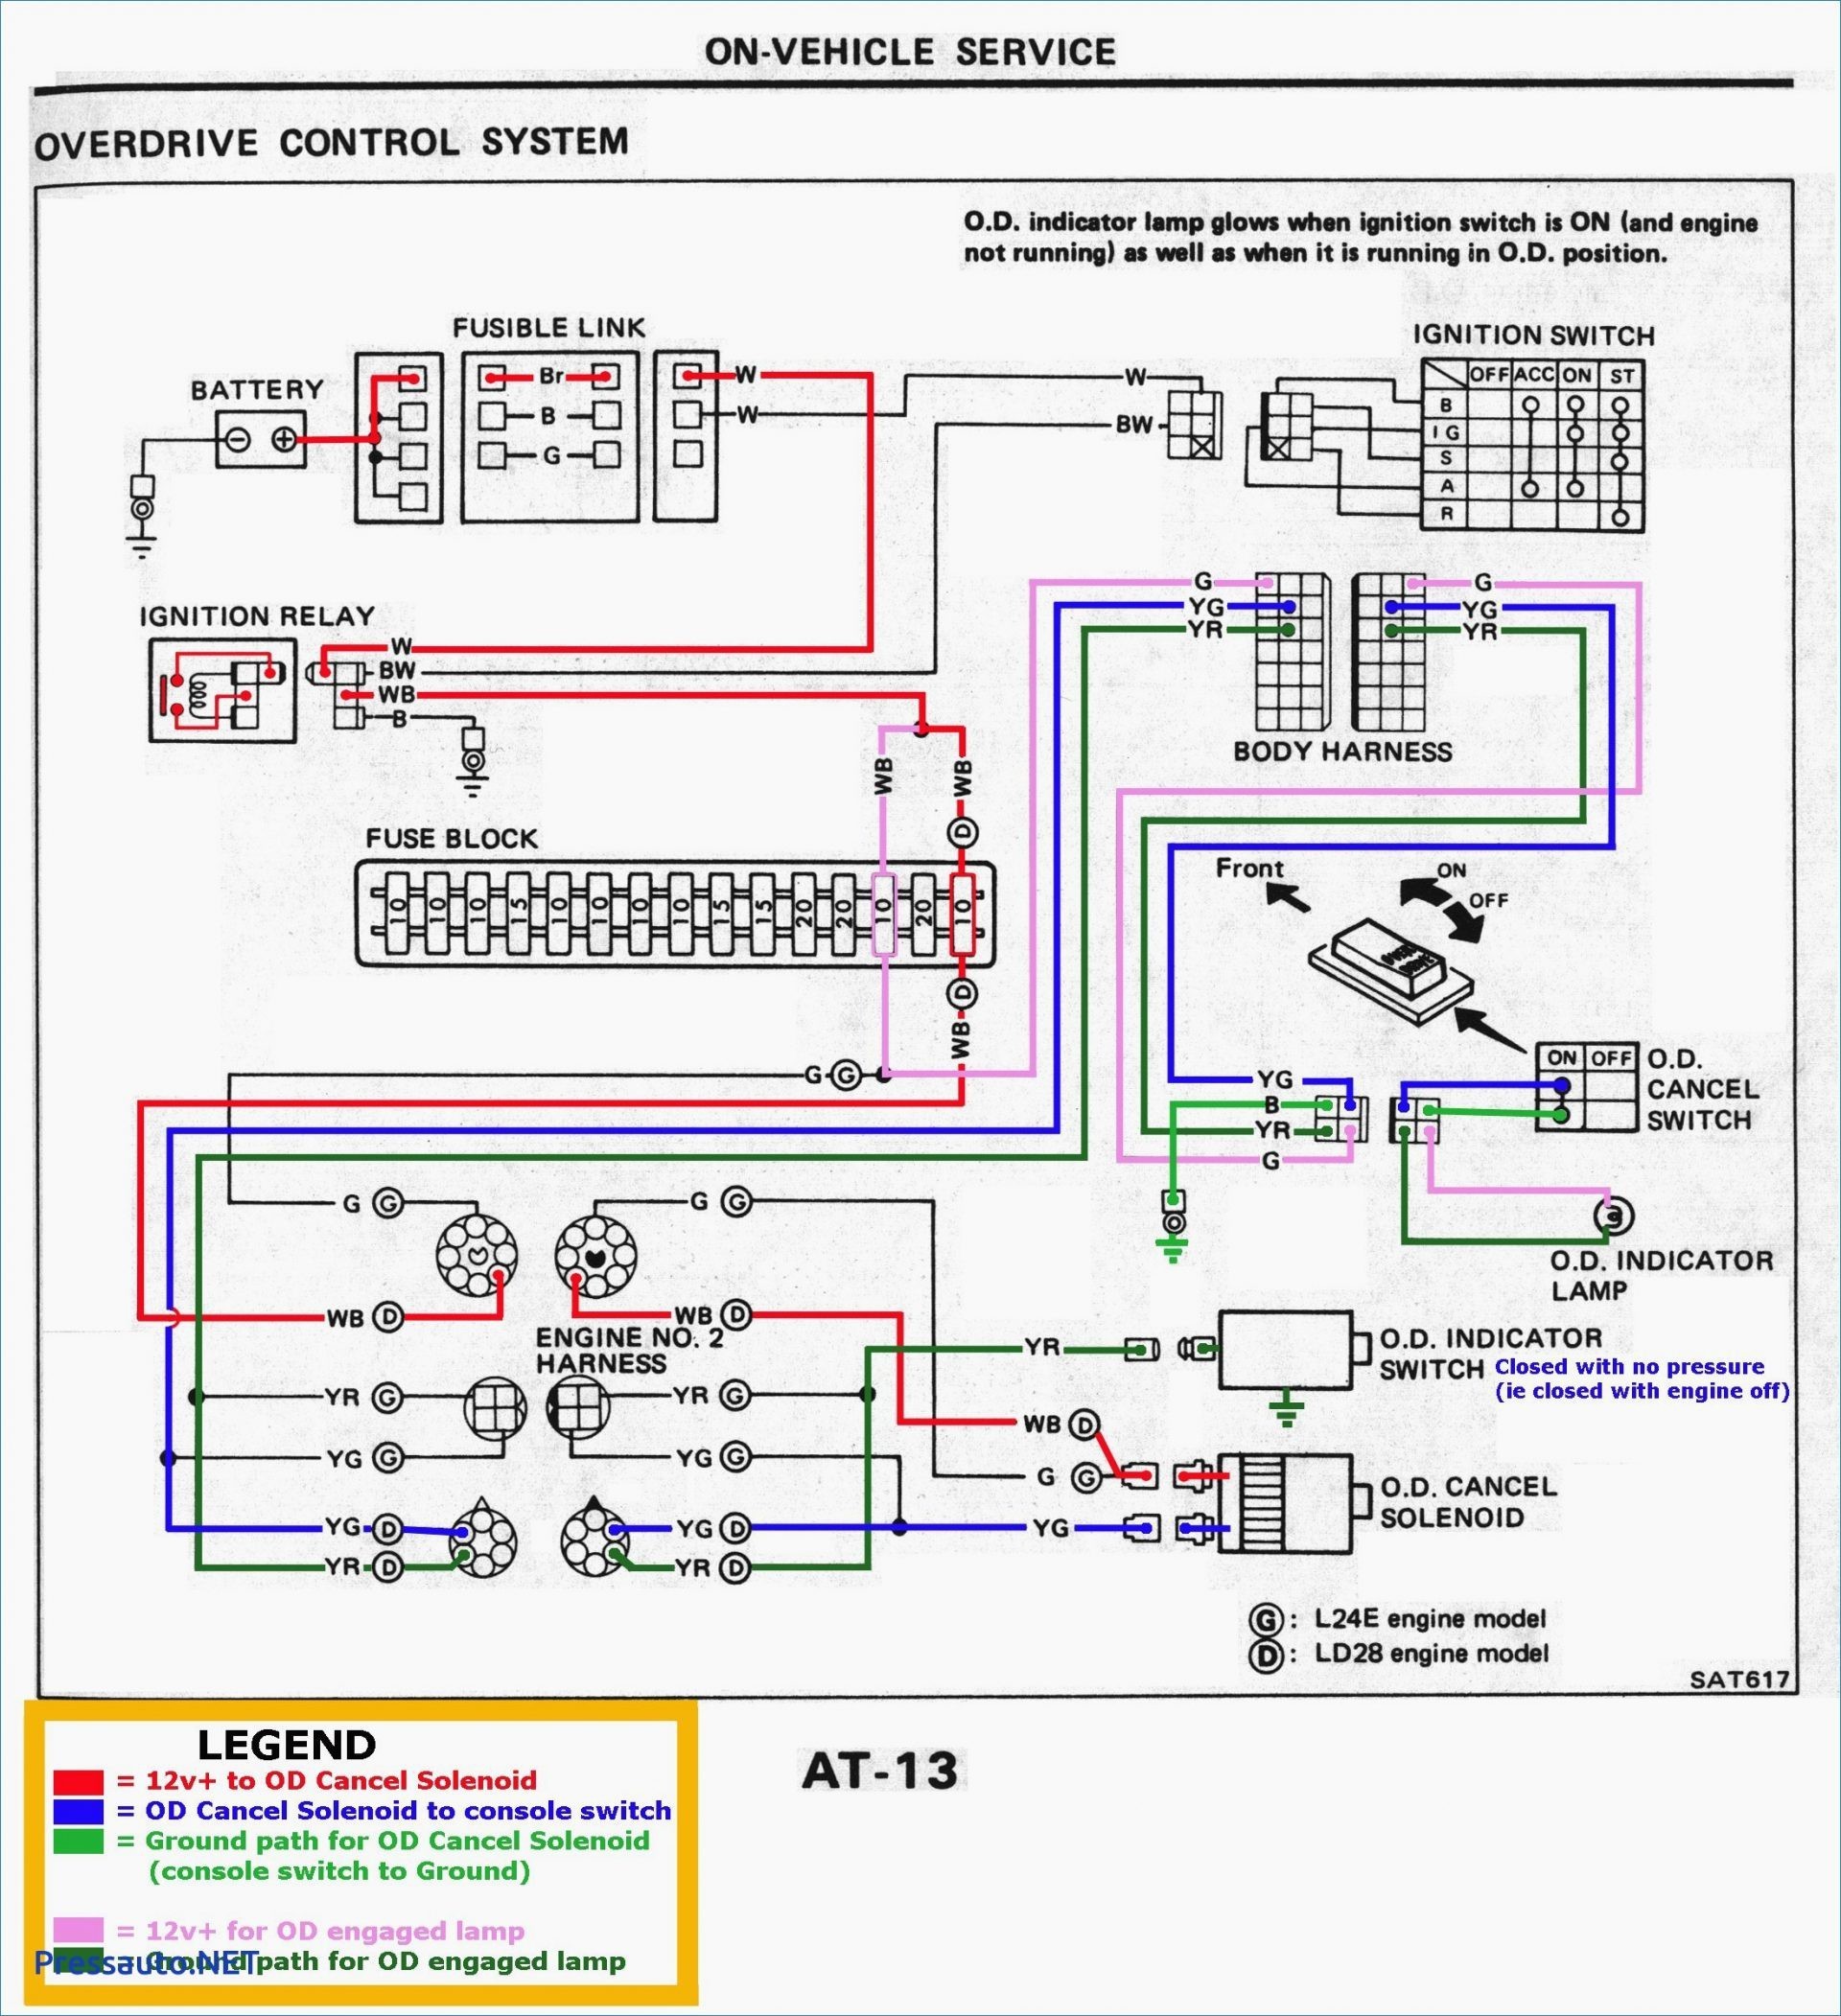 1974 Chevy Truck Wiring Diagram 2002 Silverado Motor Diagram Wiring Diagram S for Help Your Of 1974 Chevy Truck Wiring Diagram